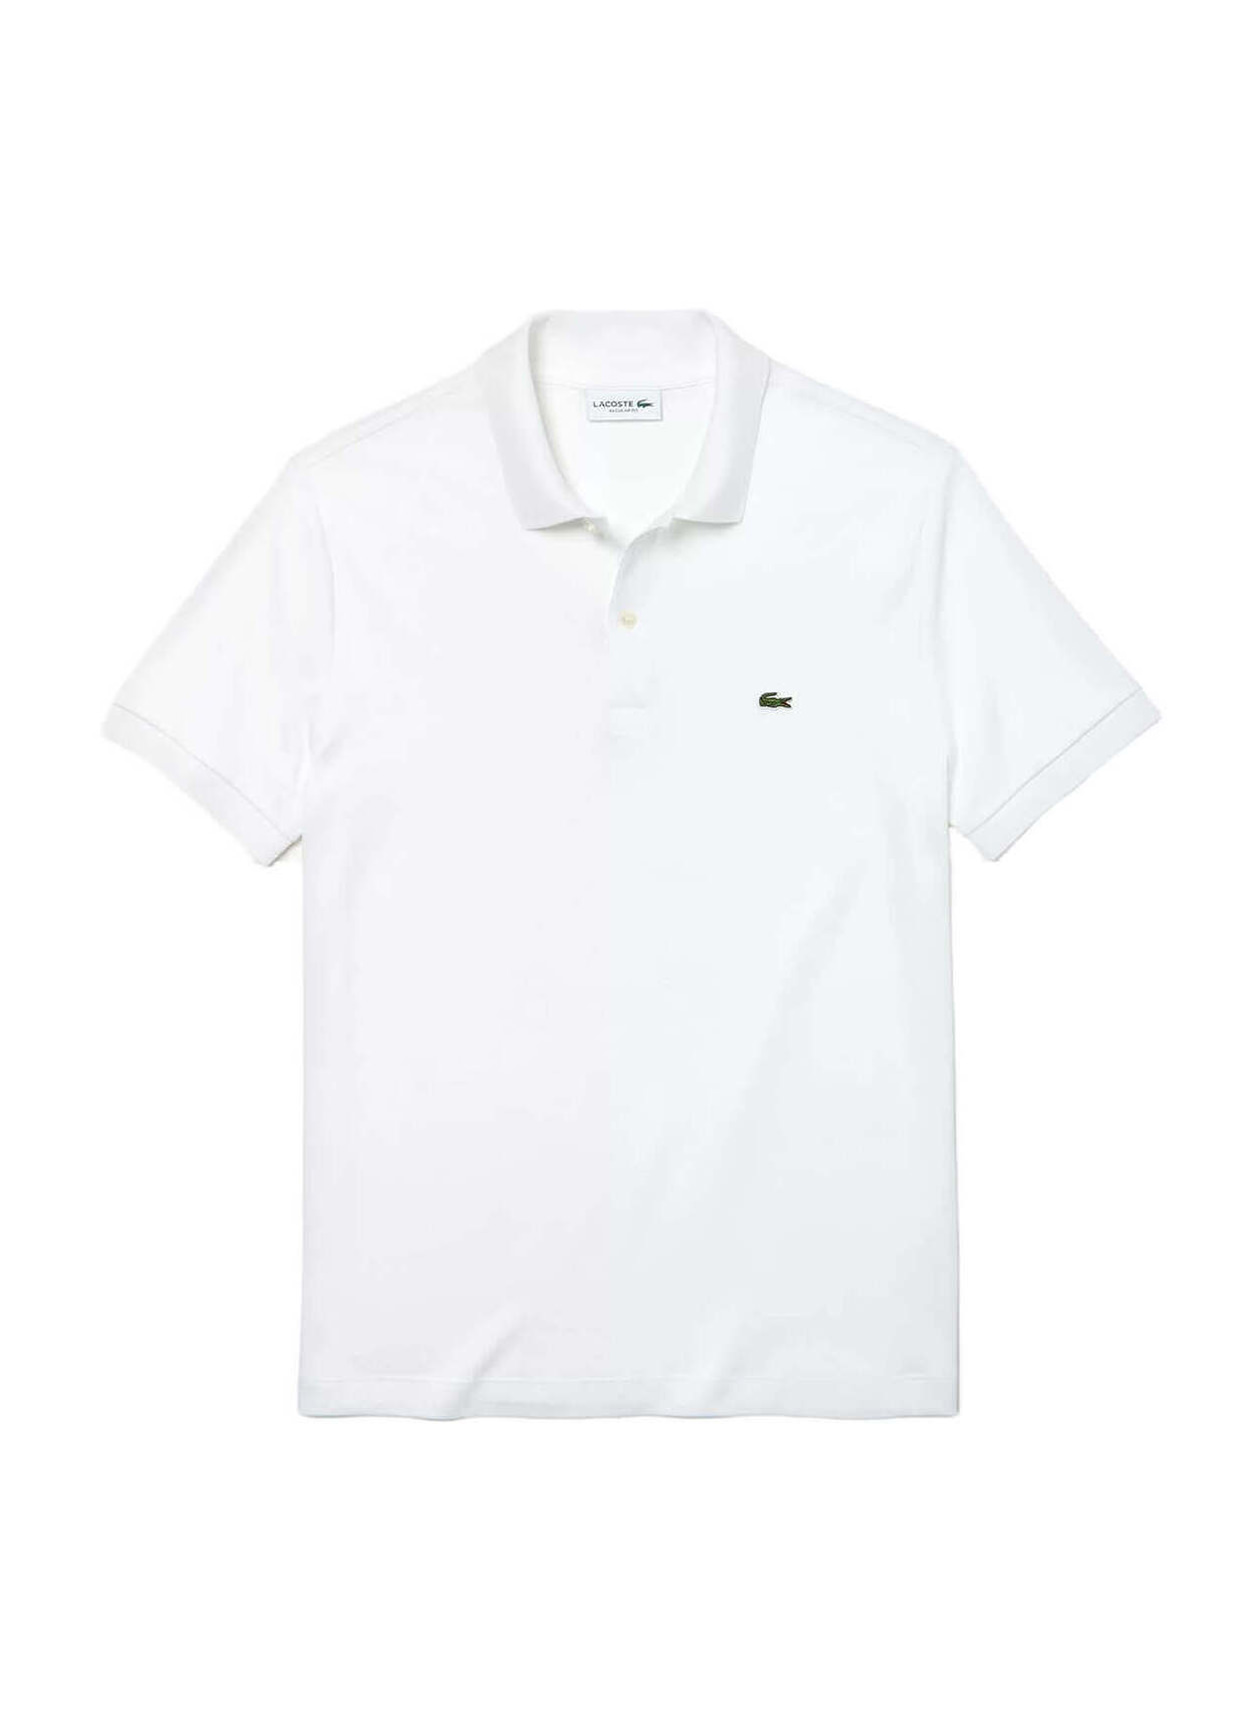 Lacoste Men's White Regular Fit Soft Cotton Polo